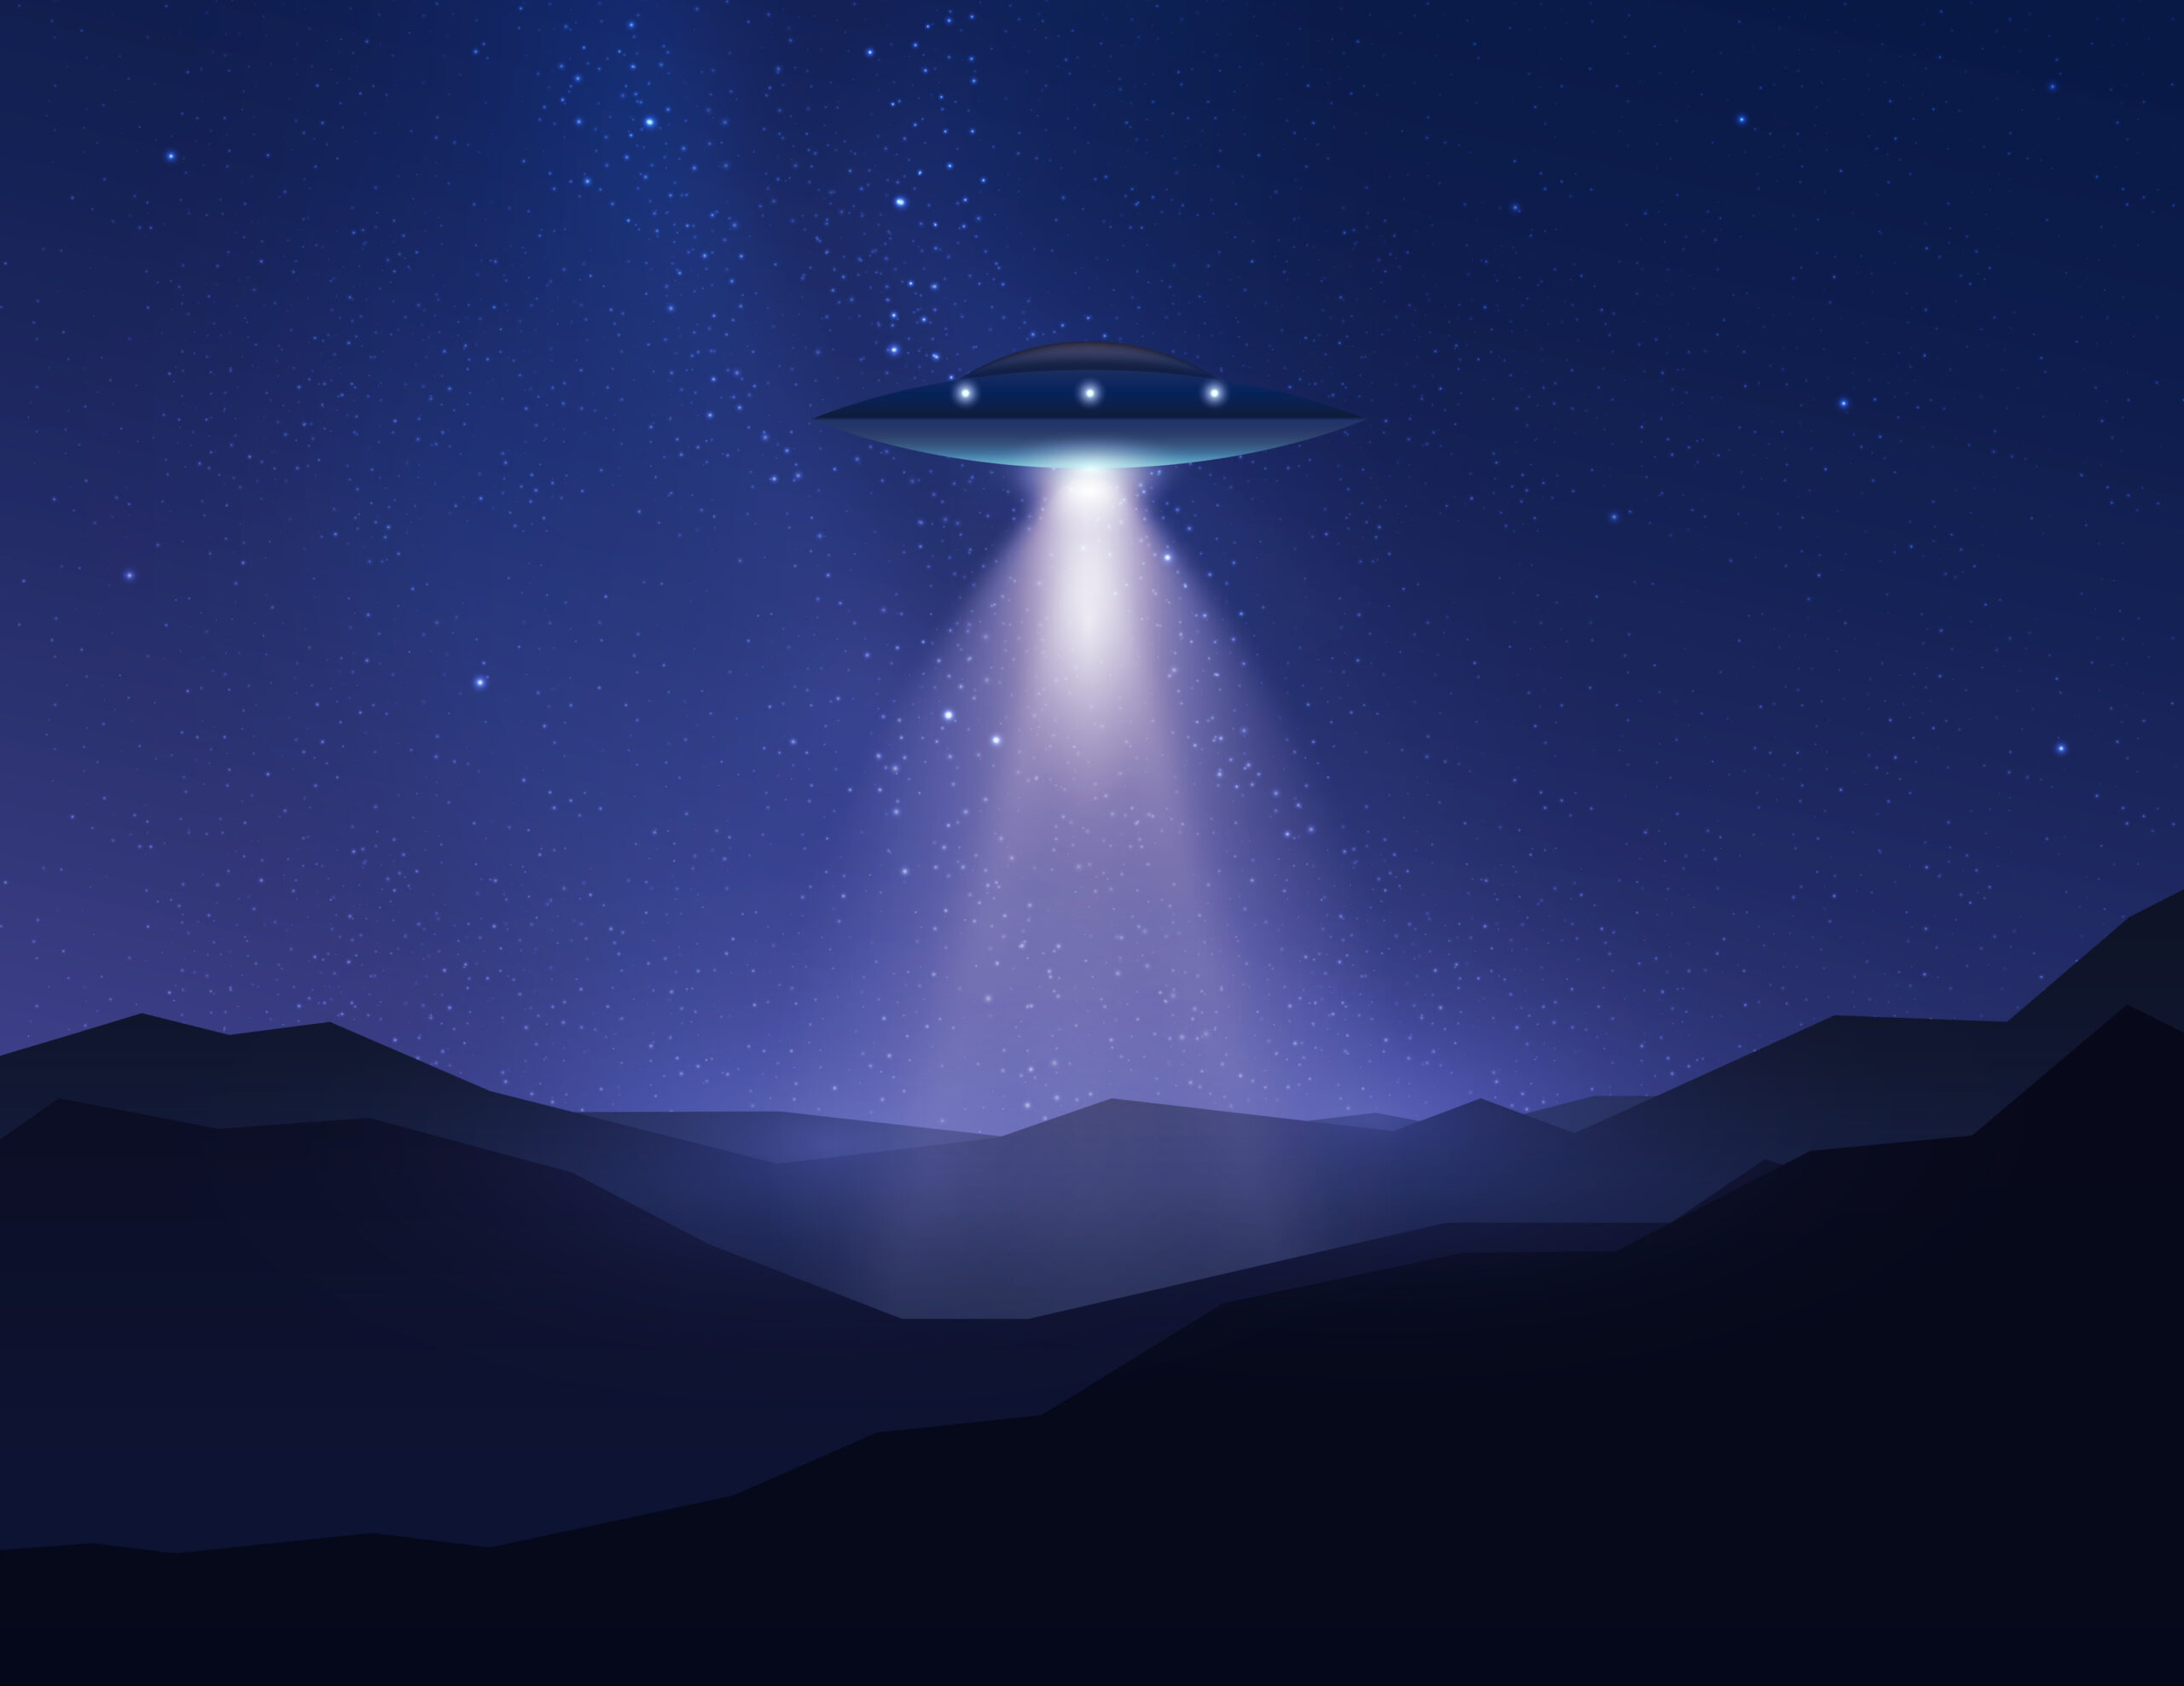 A UFO (or UAP) sending a laser beam towards a dark planet